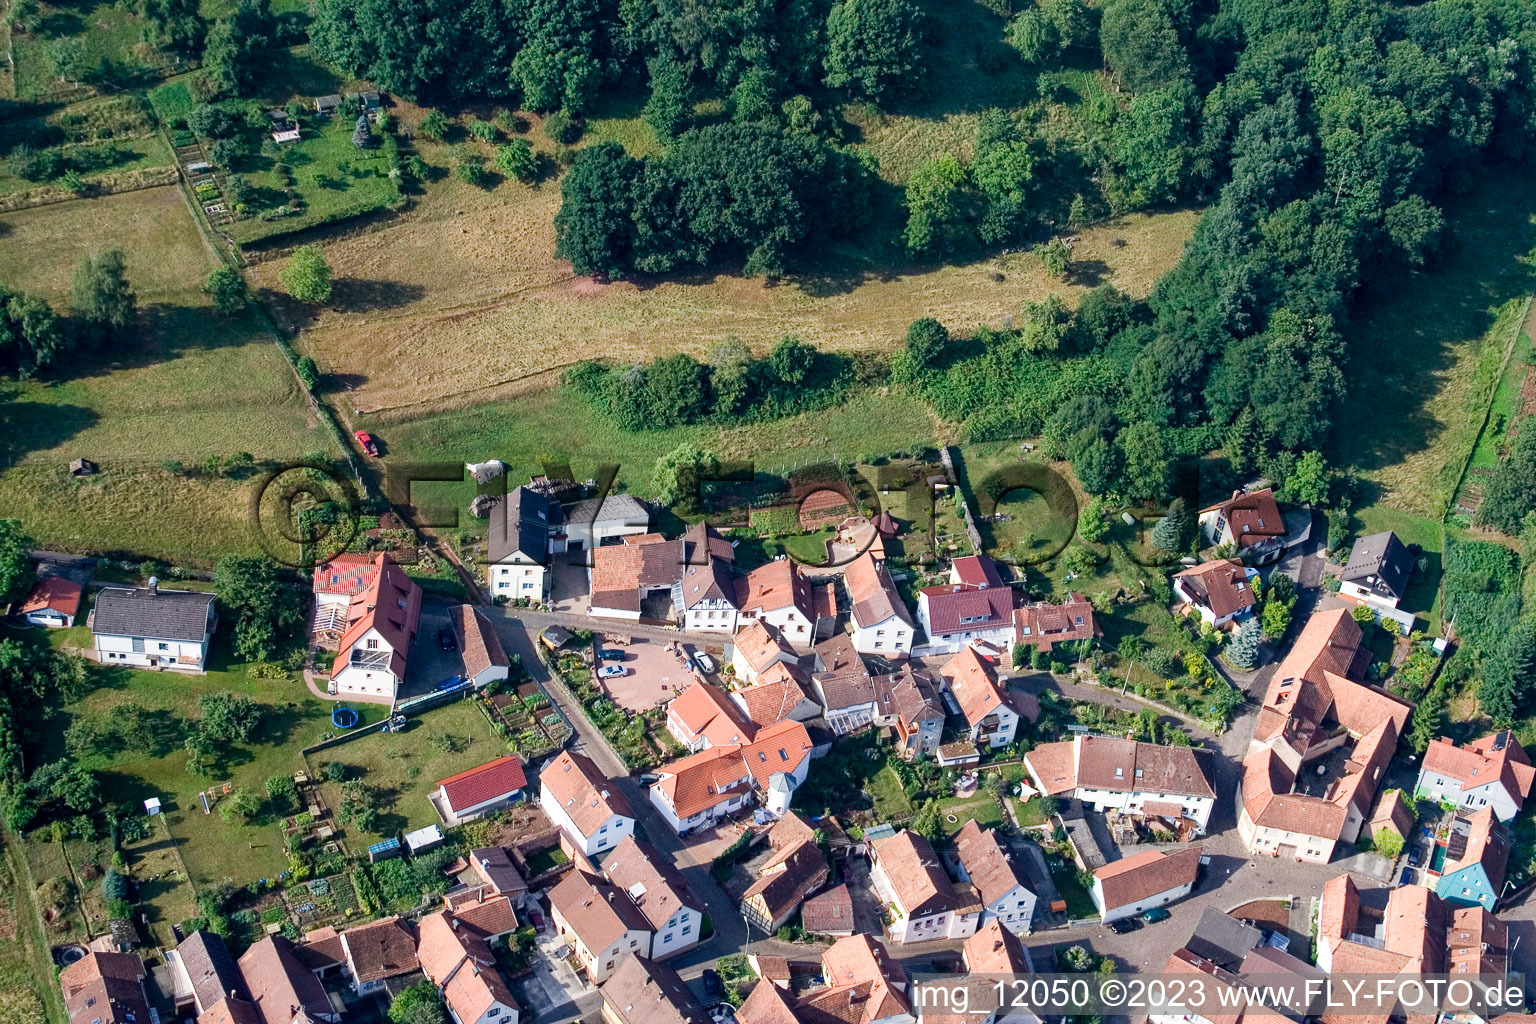 Drone recording of District Gräfenhausen in Annweiler am Trifels in the state Rhineland-Palatinate, Germany